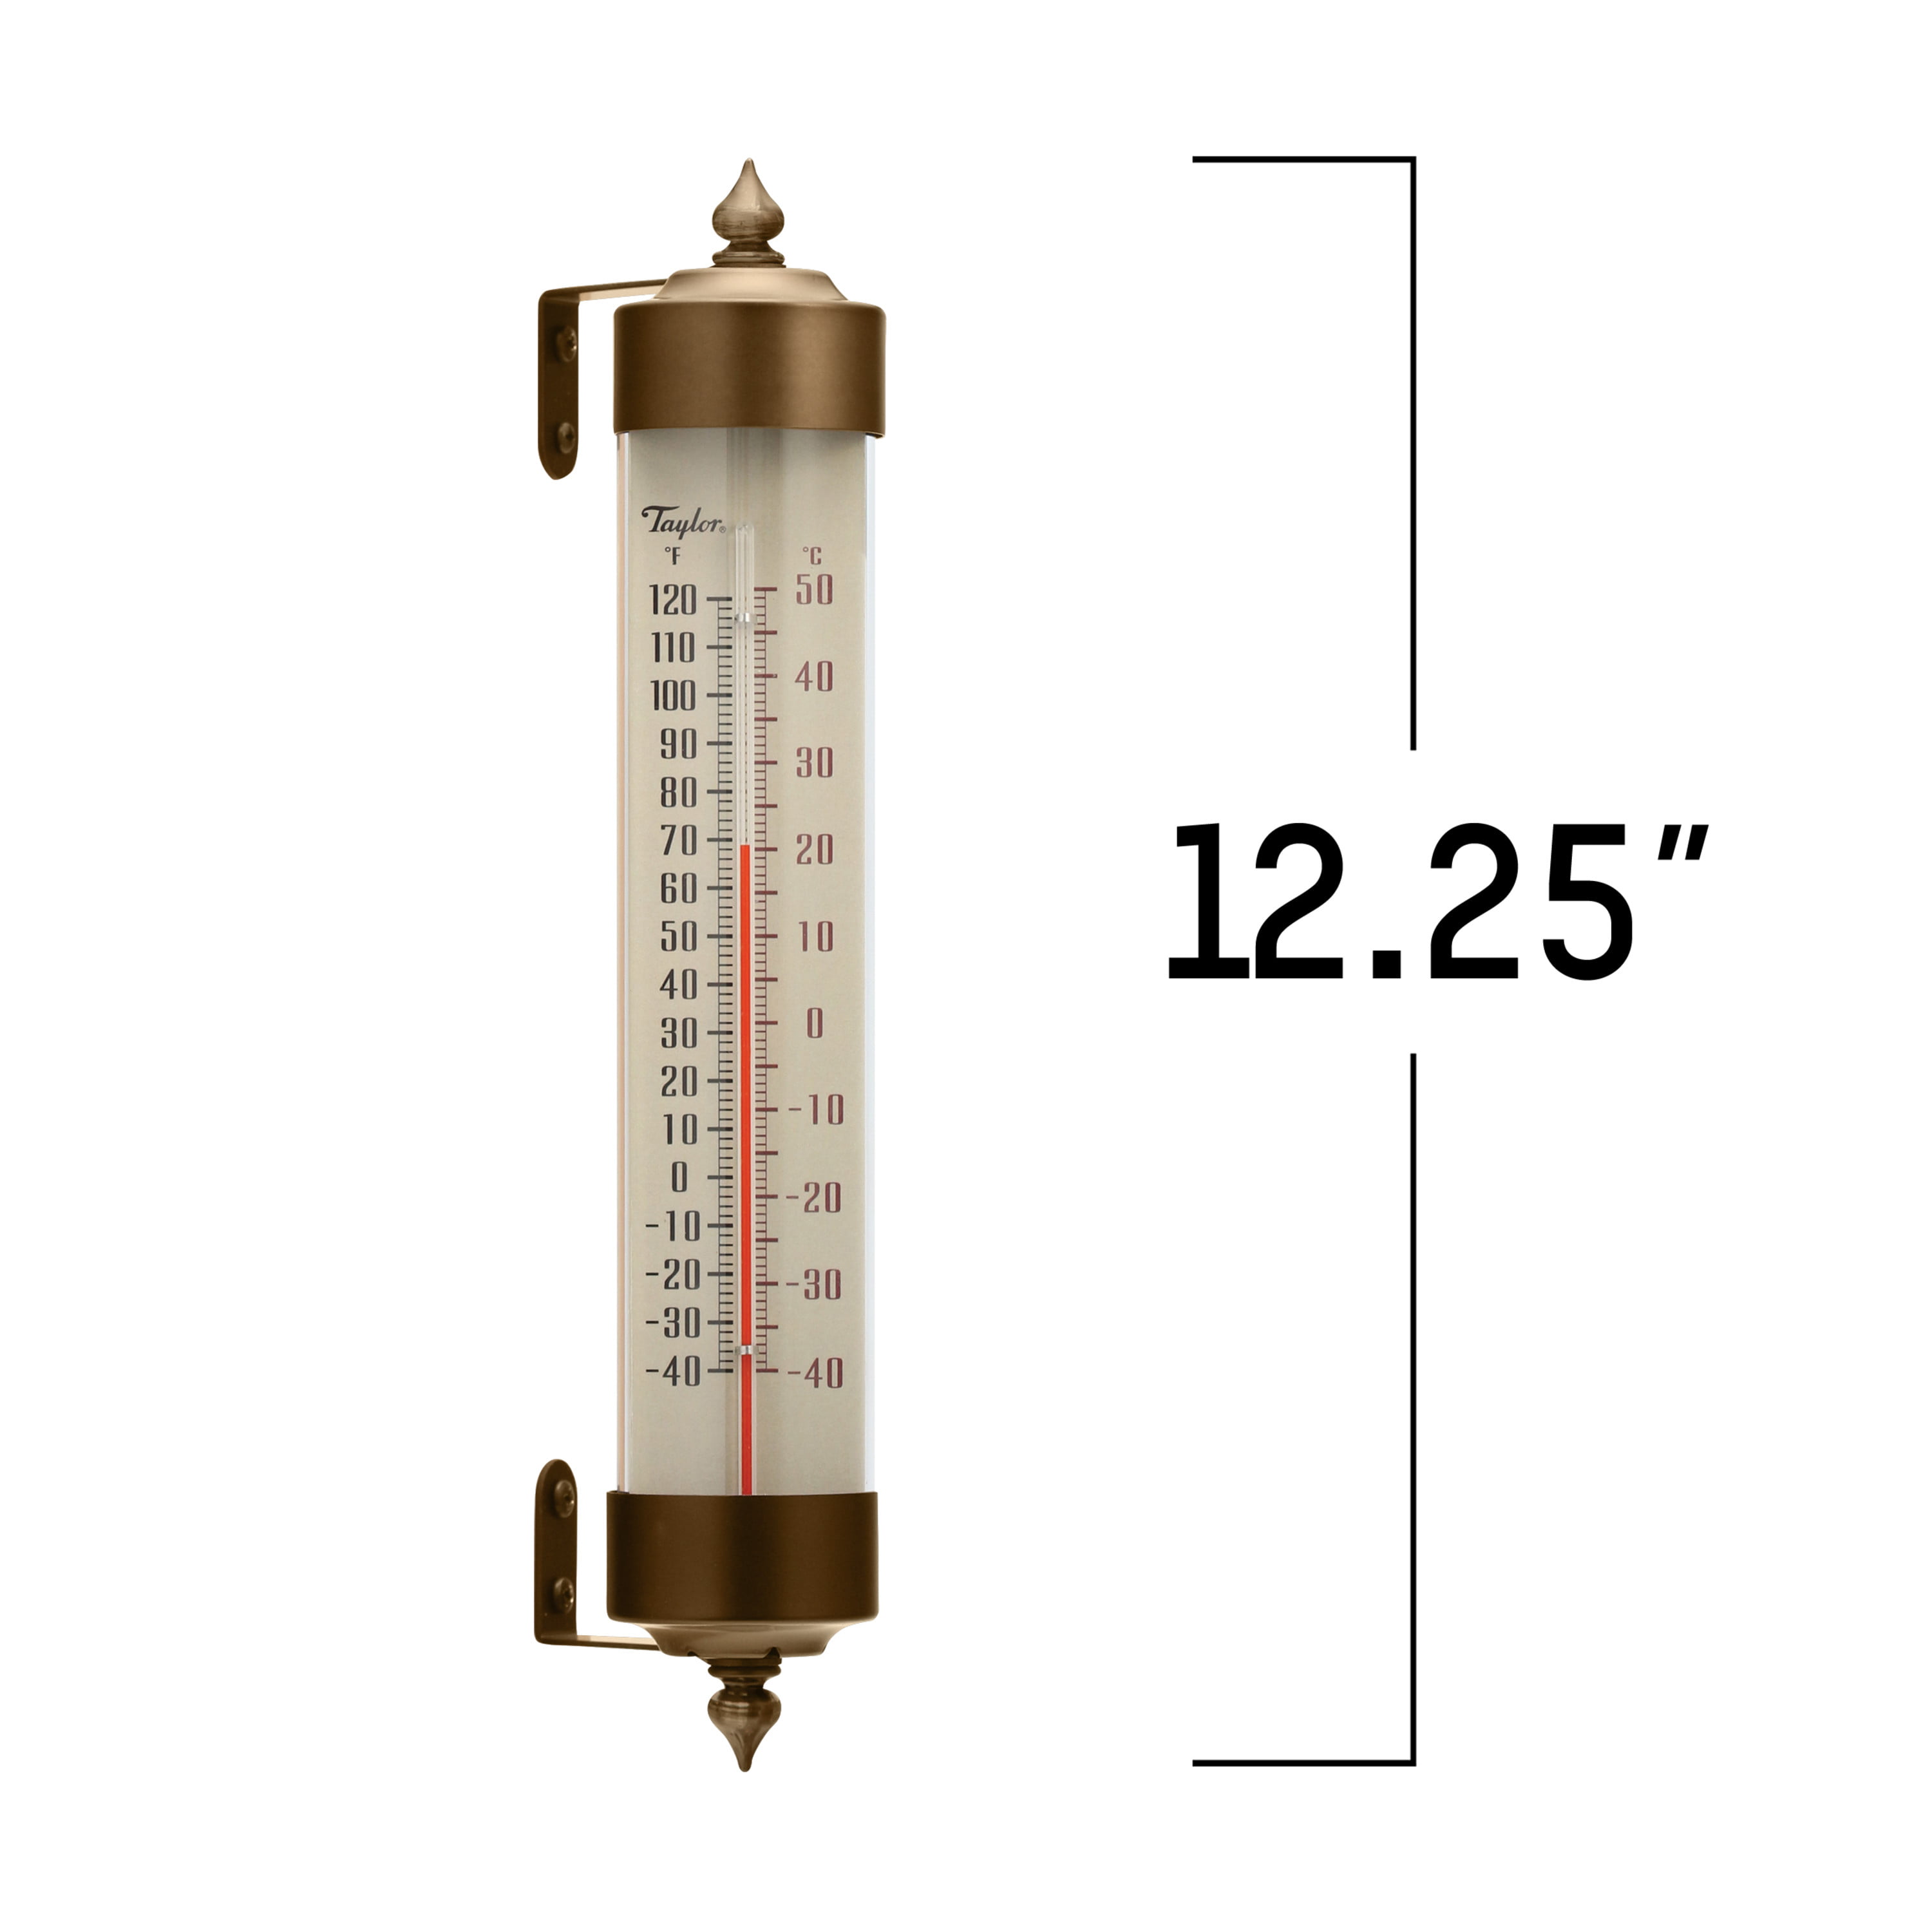 Buy Taylor Heritage Aluminum Dial Indoor Outdoor Thermometer Bronze Trim